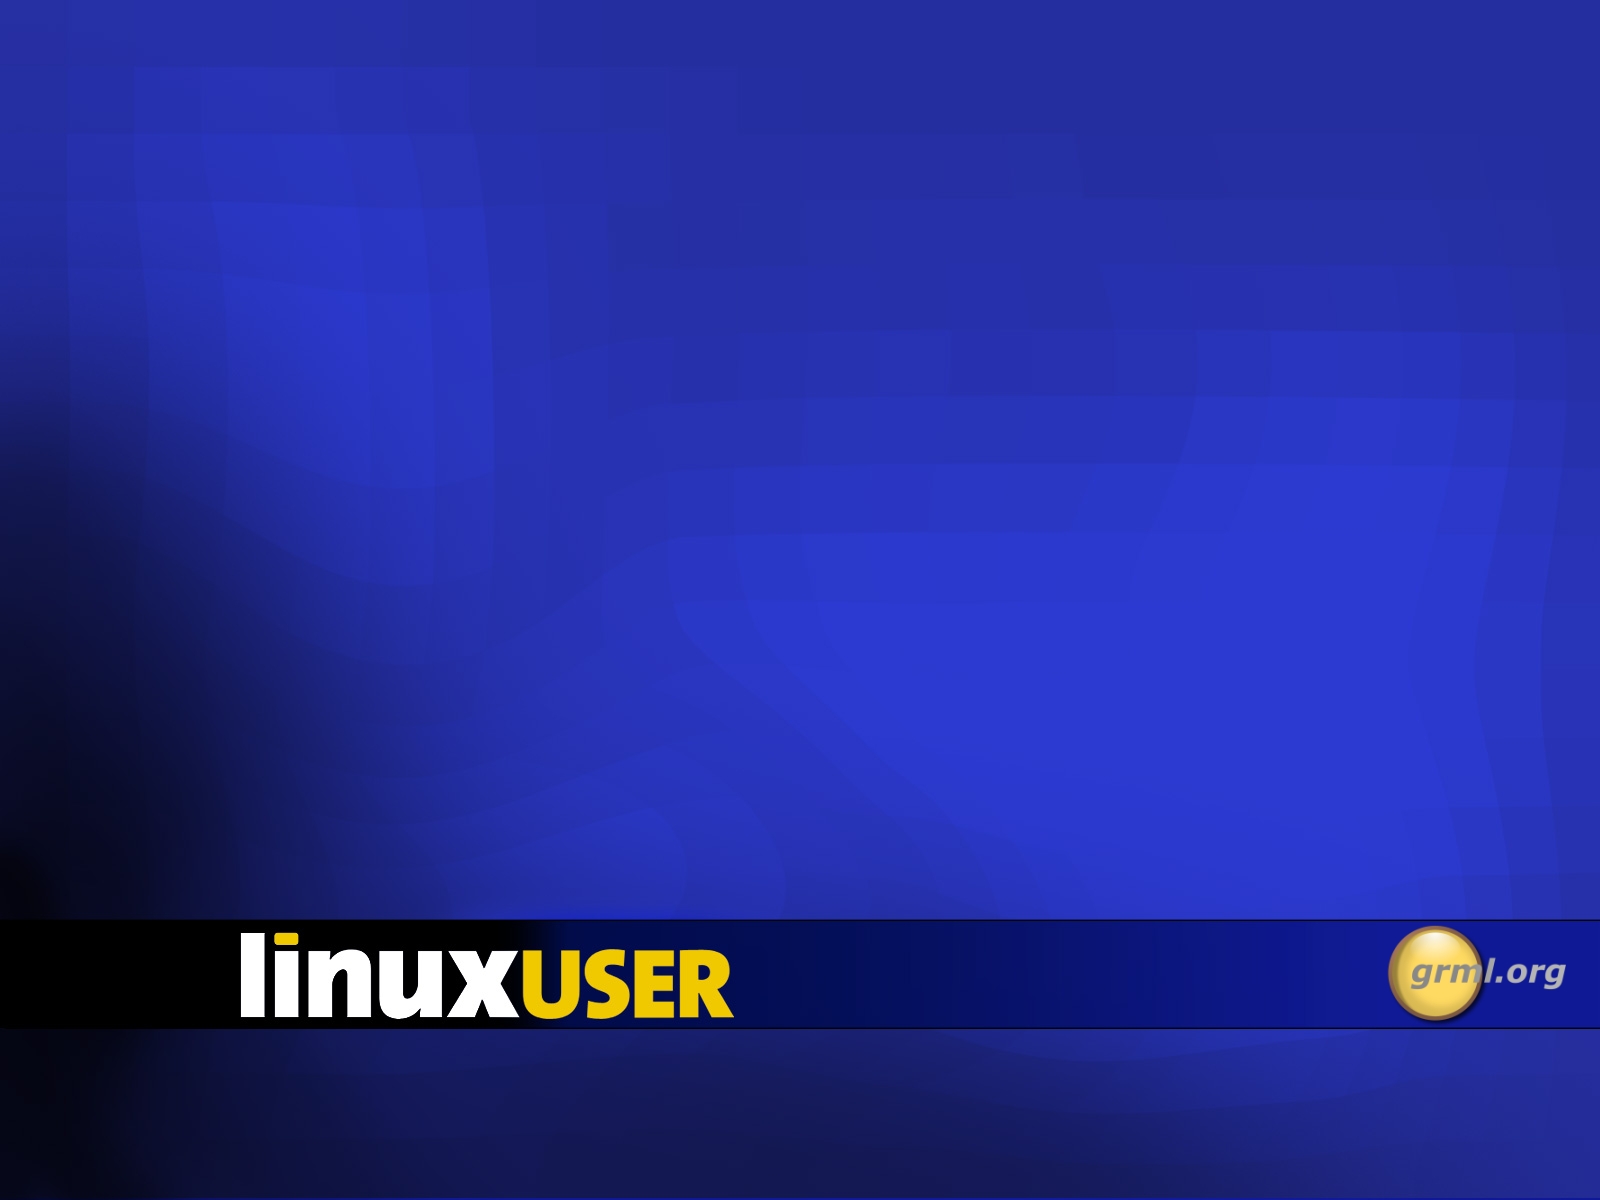 grml-specials/linux-user.jpg